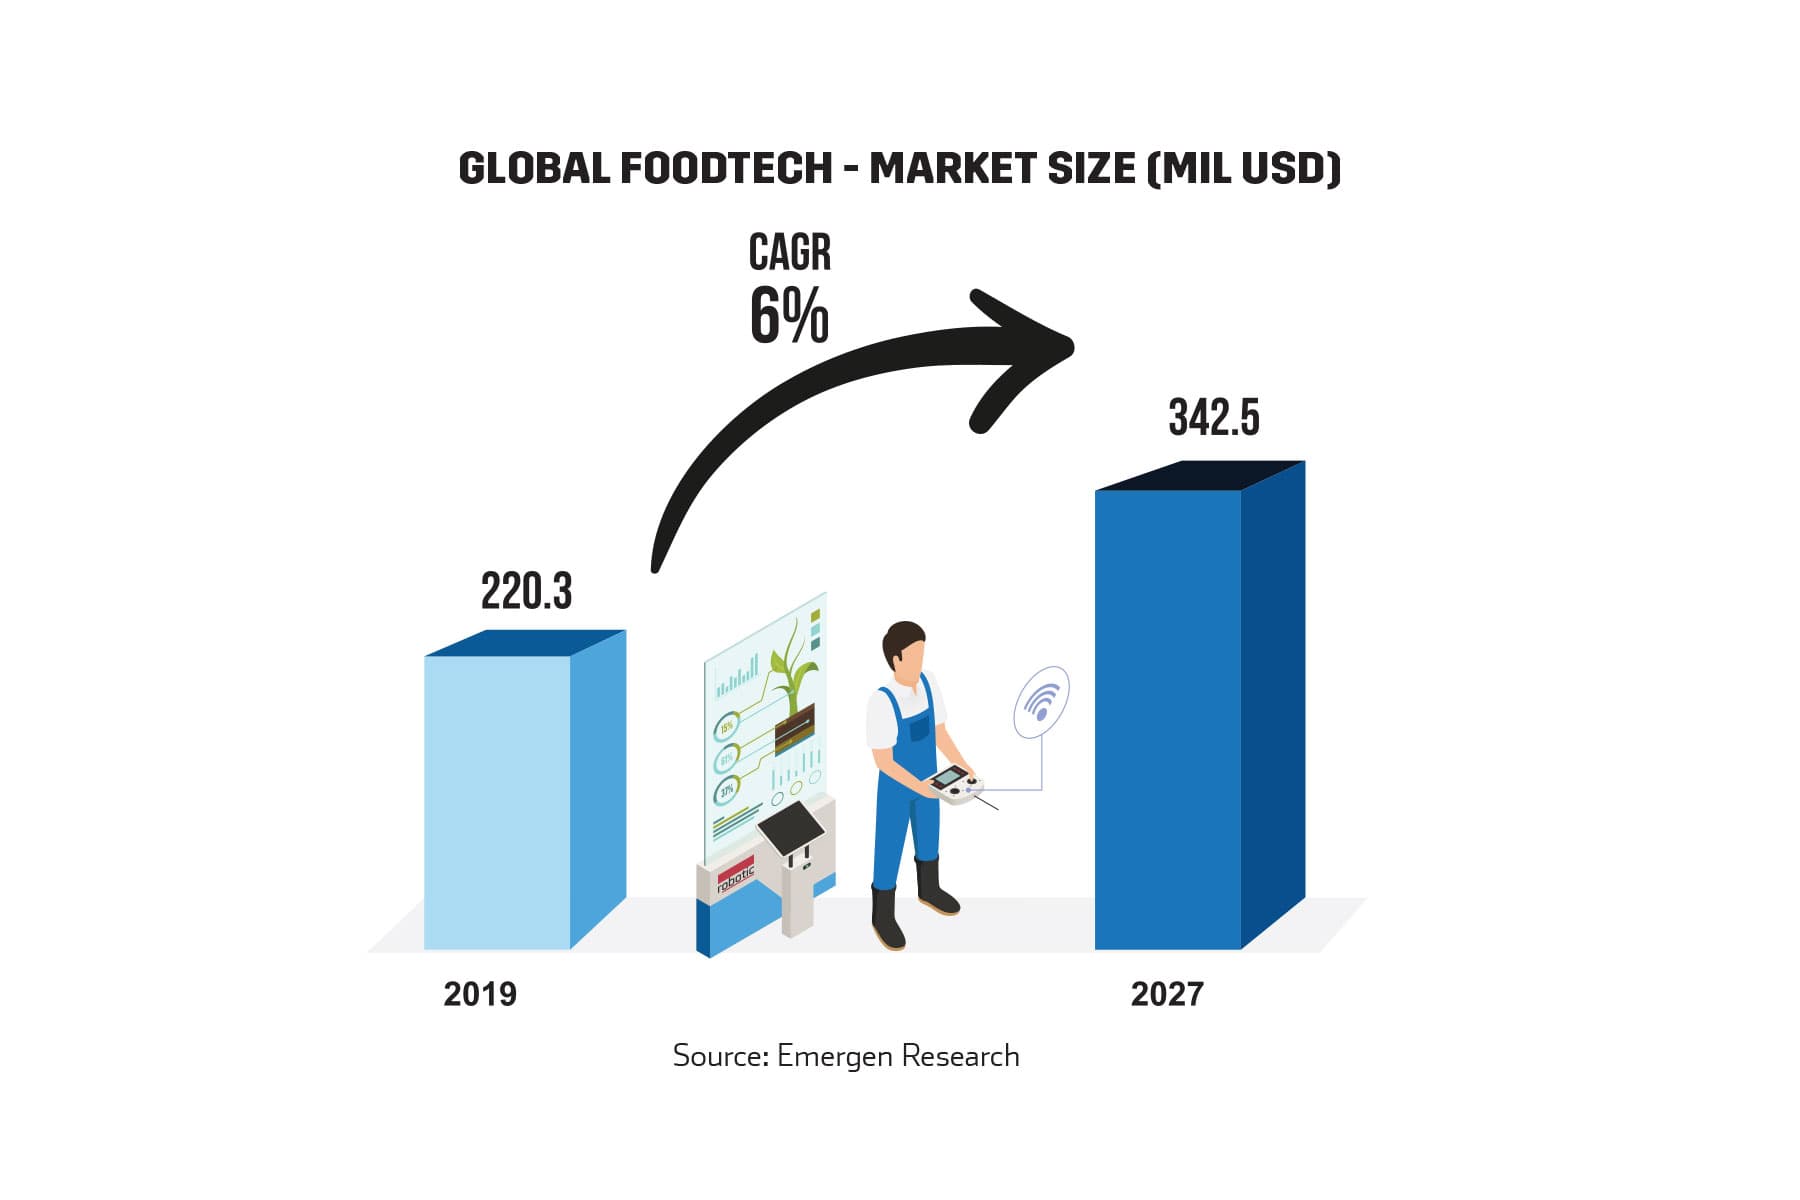 Global foodtech - market size (mil usd)Global foodtech - market size (mil usd)